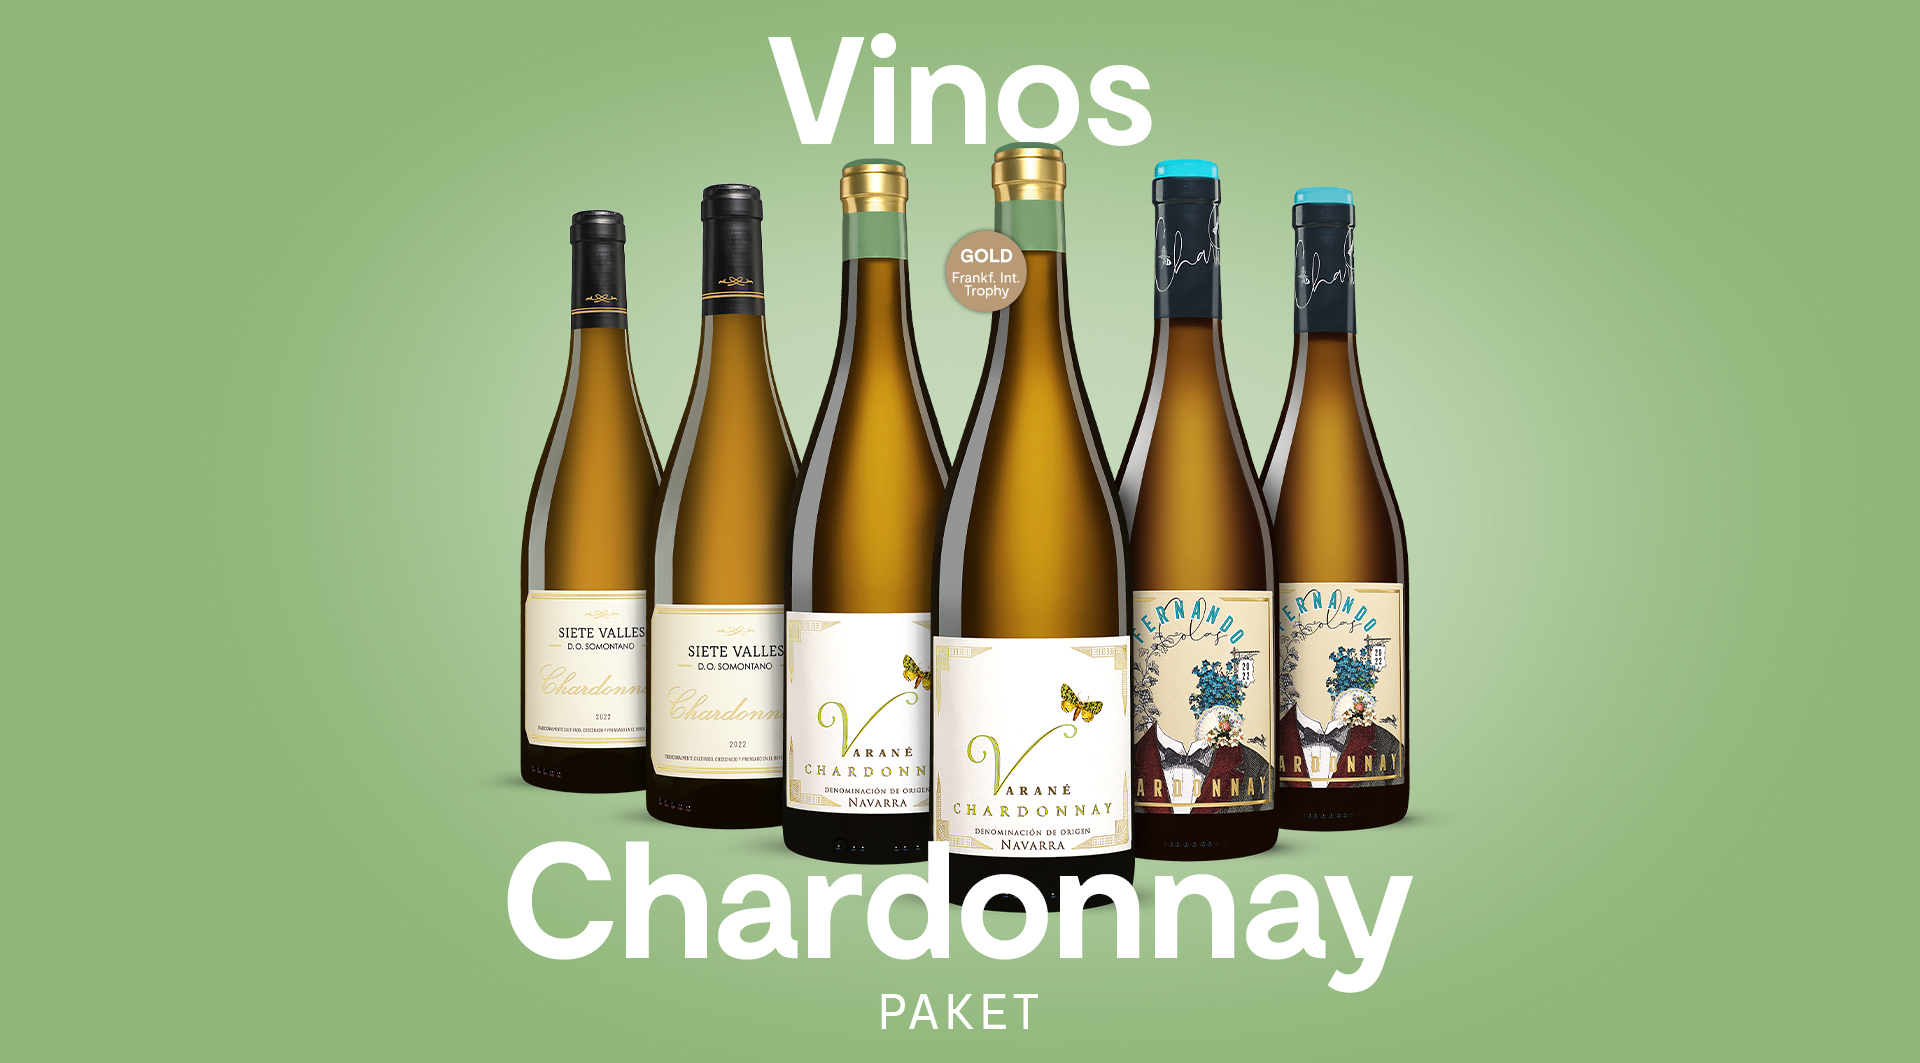 Vinos Chardonnay Paket